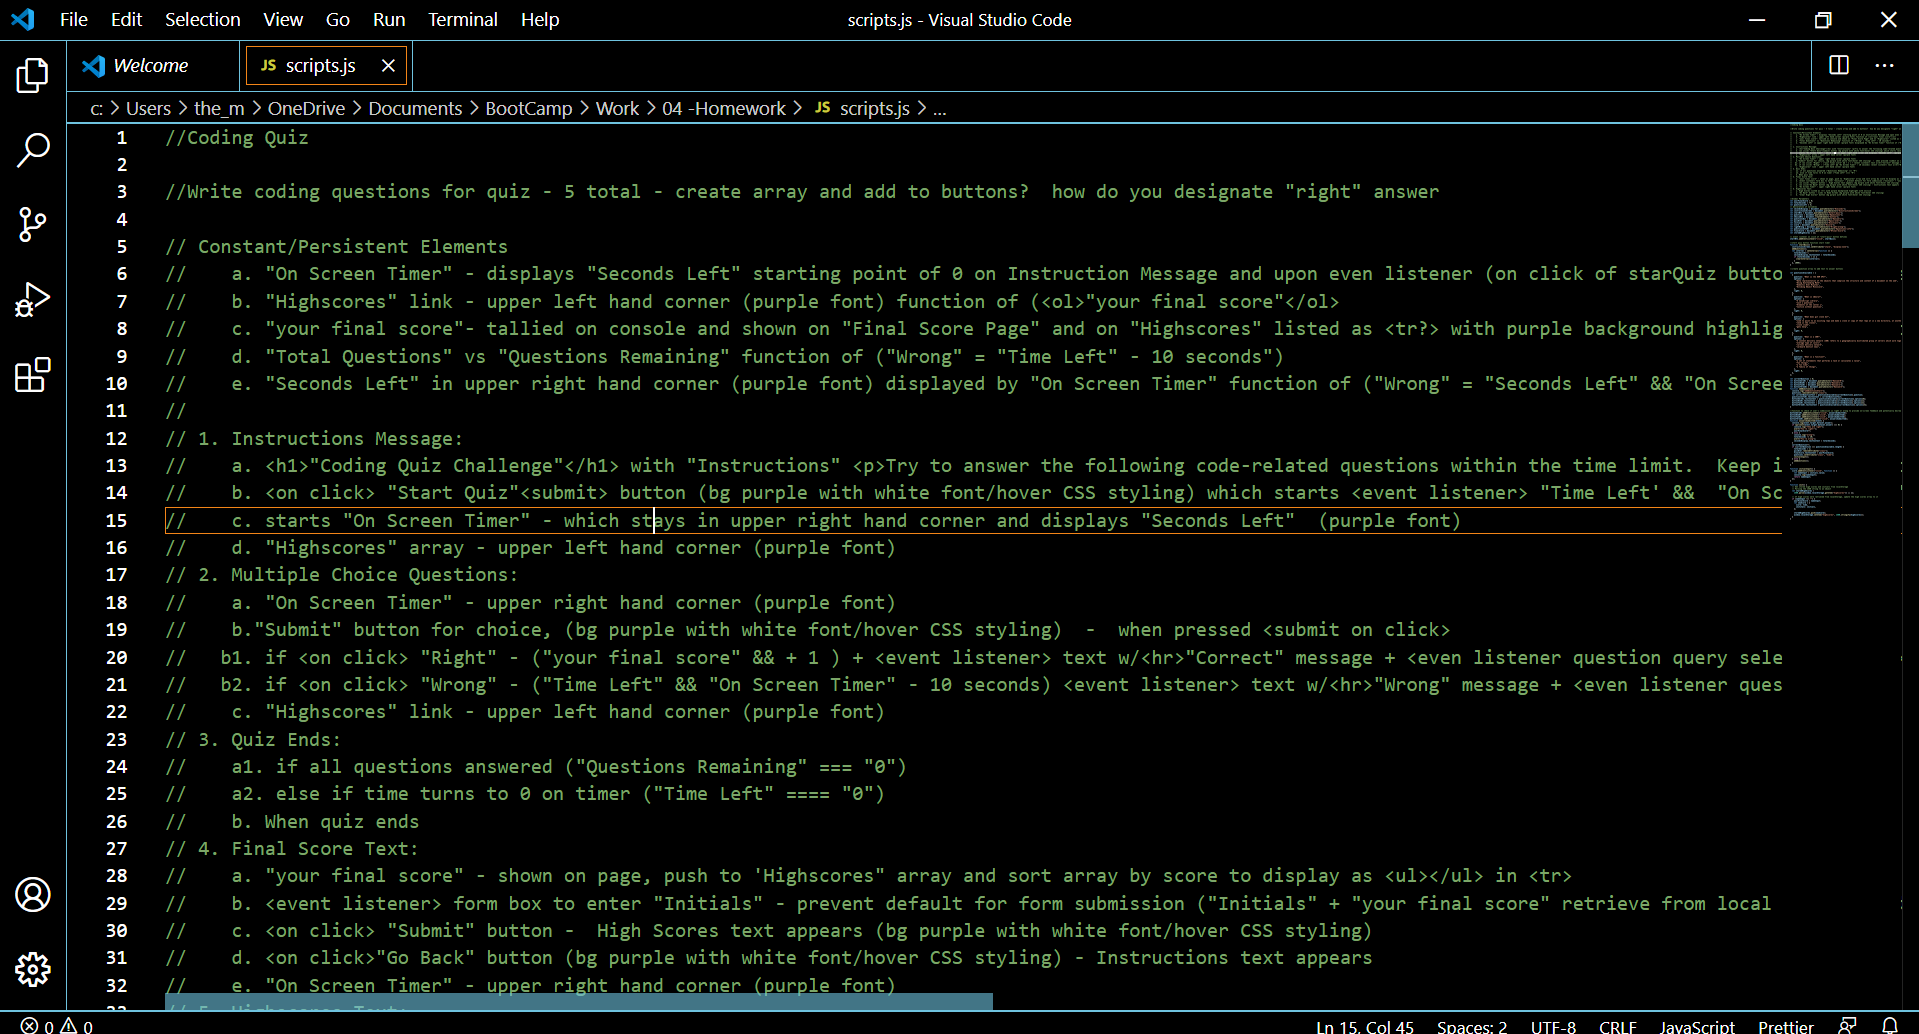 Screenshot of finalized JavaScript Code